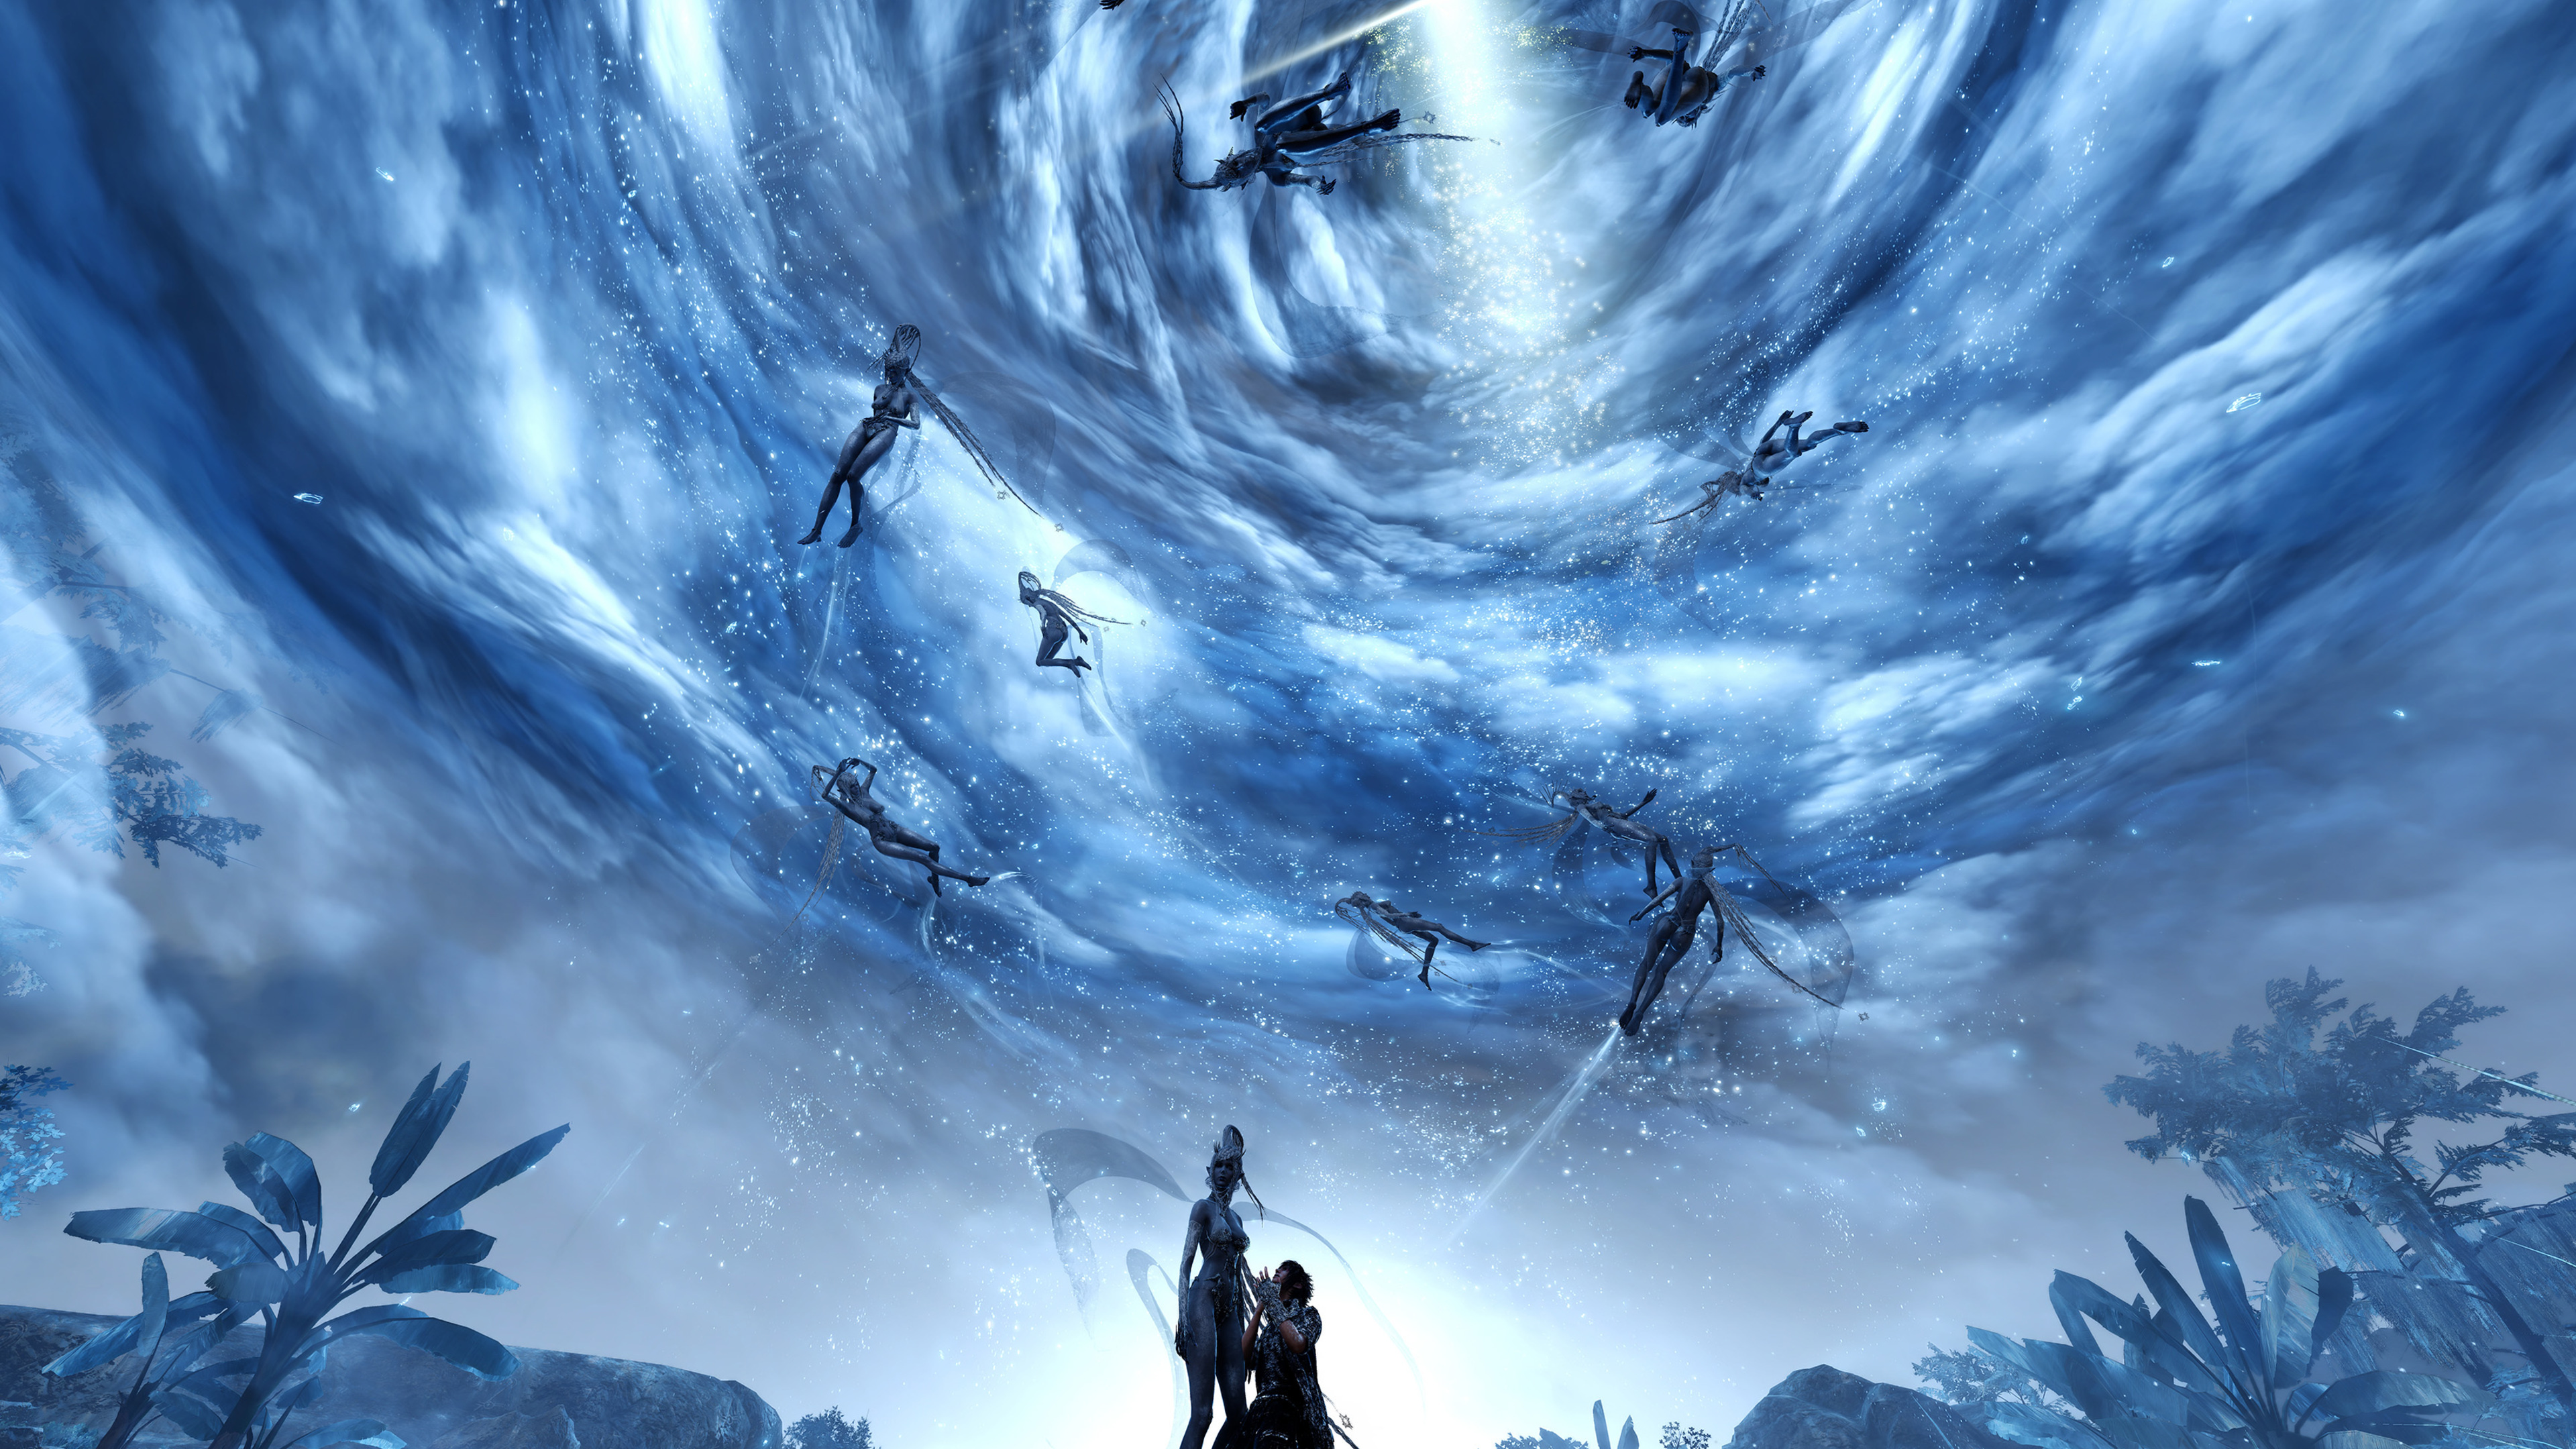 Final Fantasy Xv, Final Fantasy VII Remake, Illustration, Space, Mythology. Wallpaper in 3840x2160 Resolution